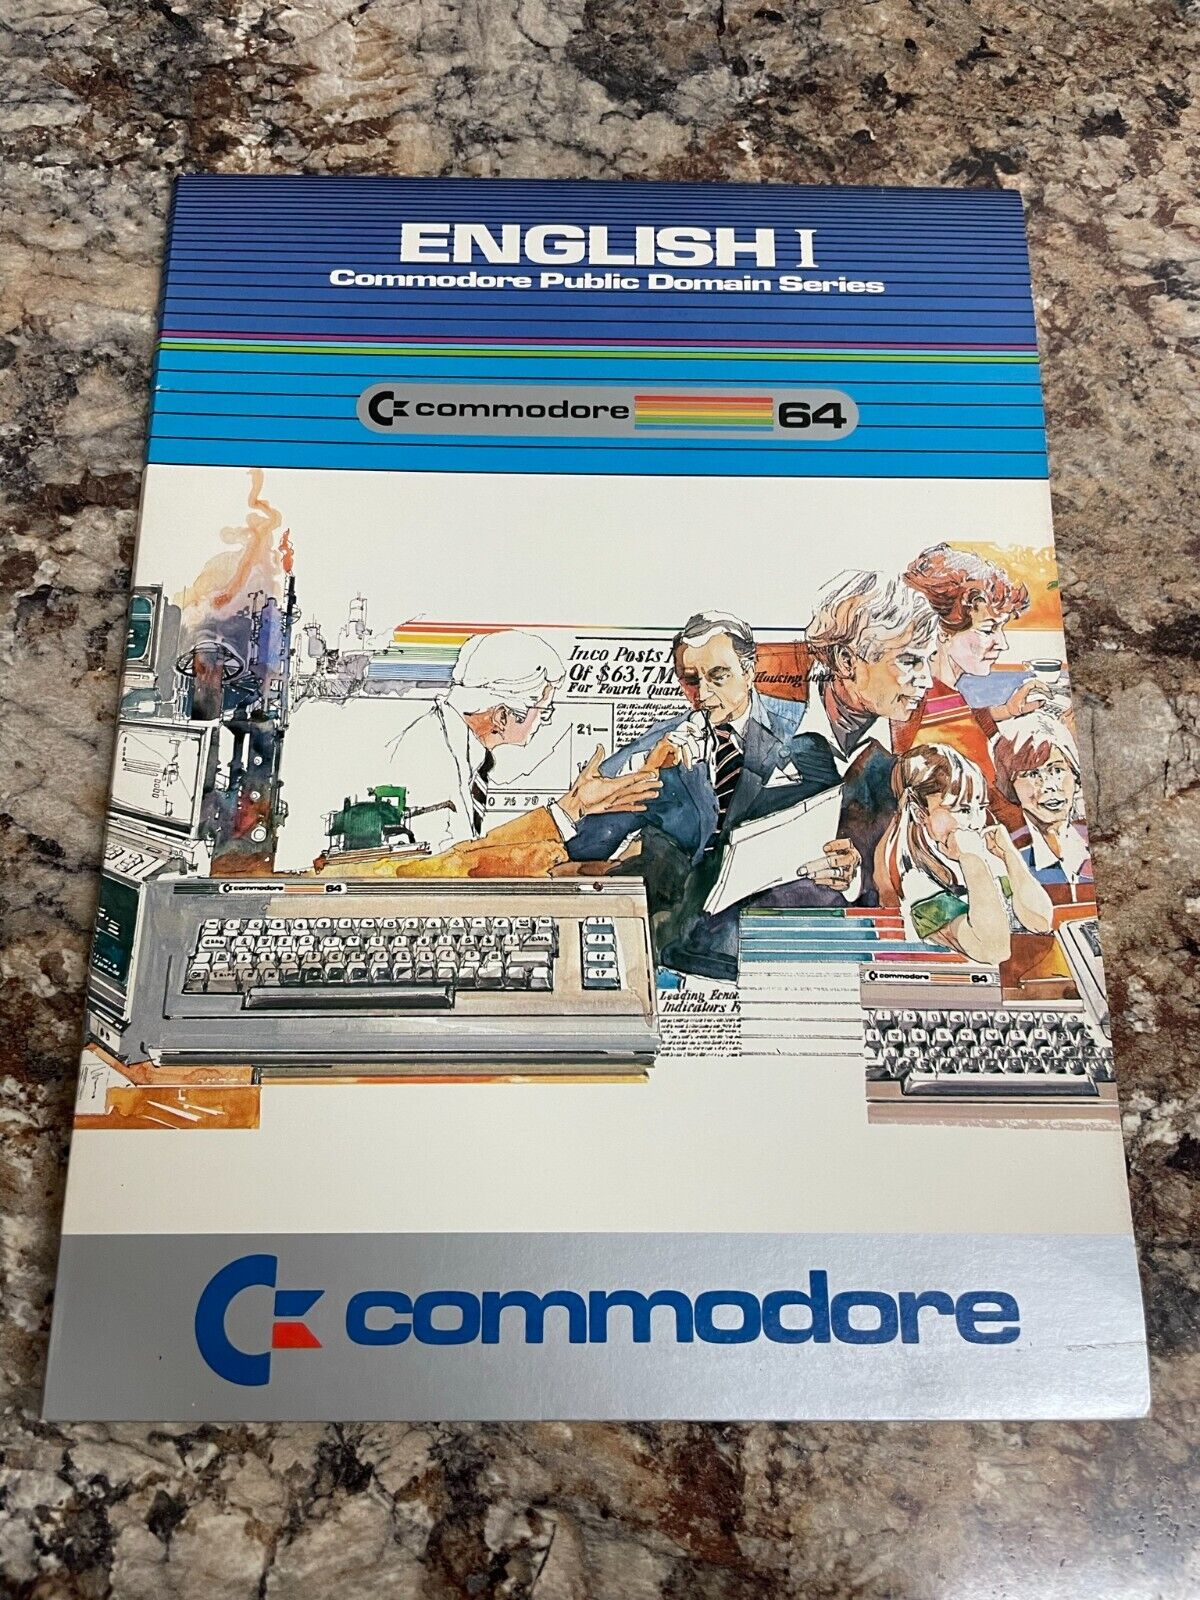 Commodore English I